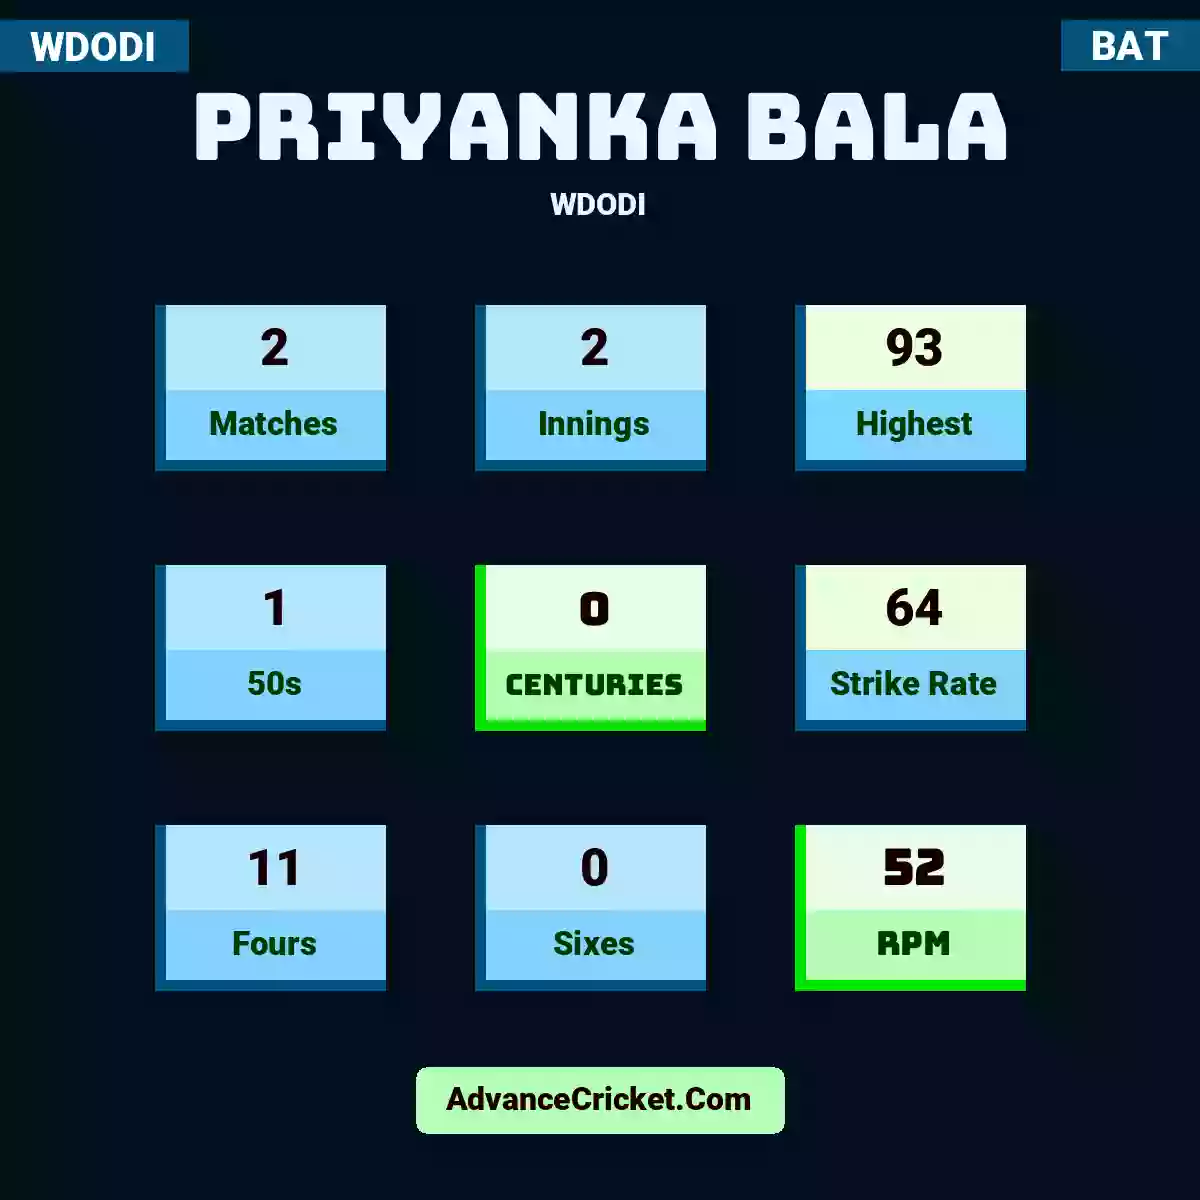 Priyanka Bala WDODI , Priyanka Bala played 2 matches, scored 93 runs as highest, 1 half-centuries, and 0 centuries, with a strike rate of 64. P.Bala hit 11 fours and 0 sixes, with an RPM of 52.